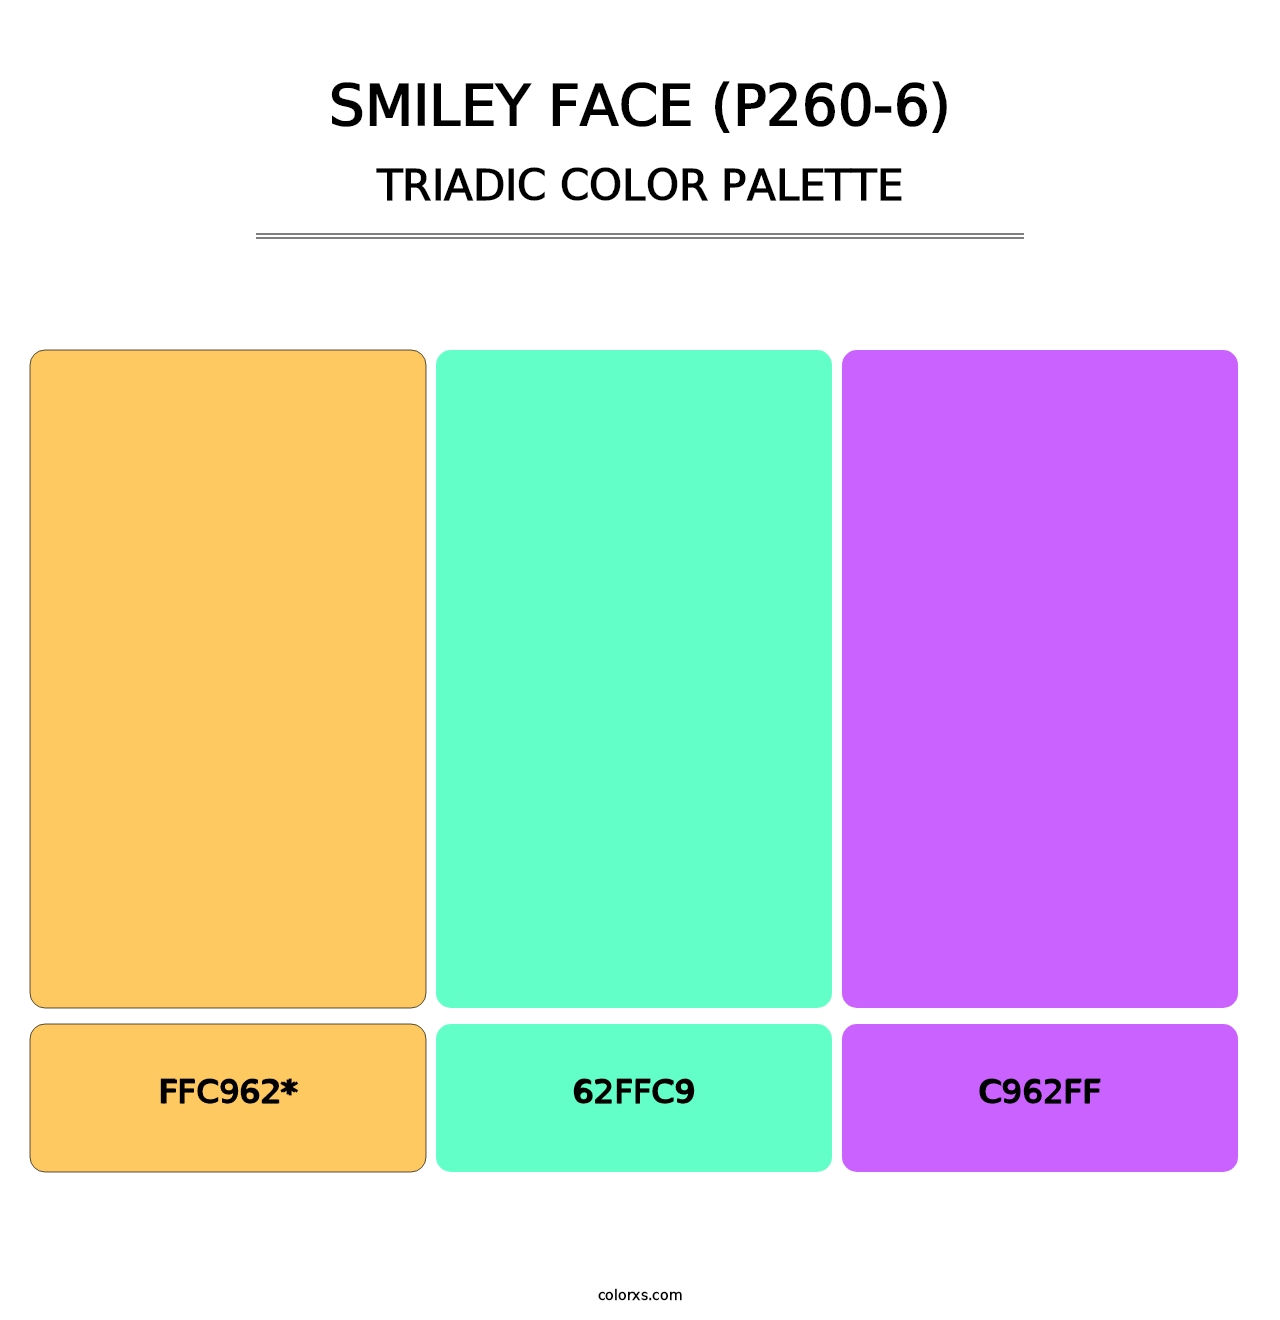 Smiley Face (P260-6) - Triadic Color Palette